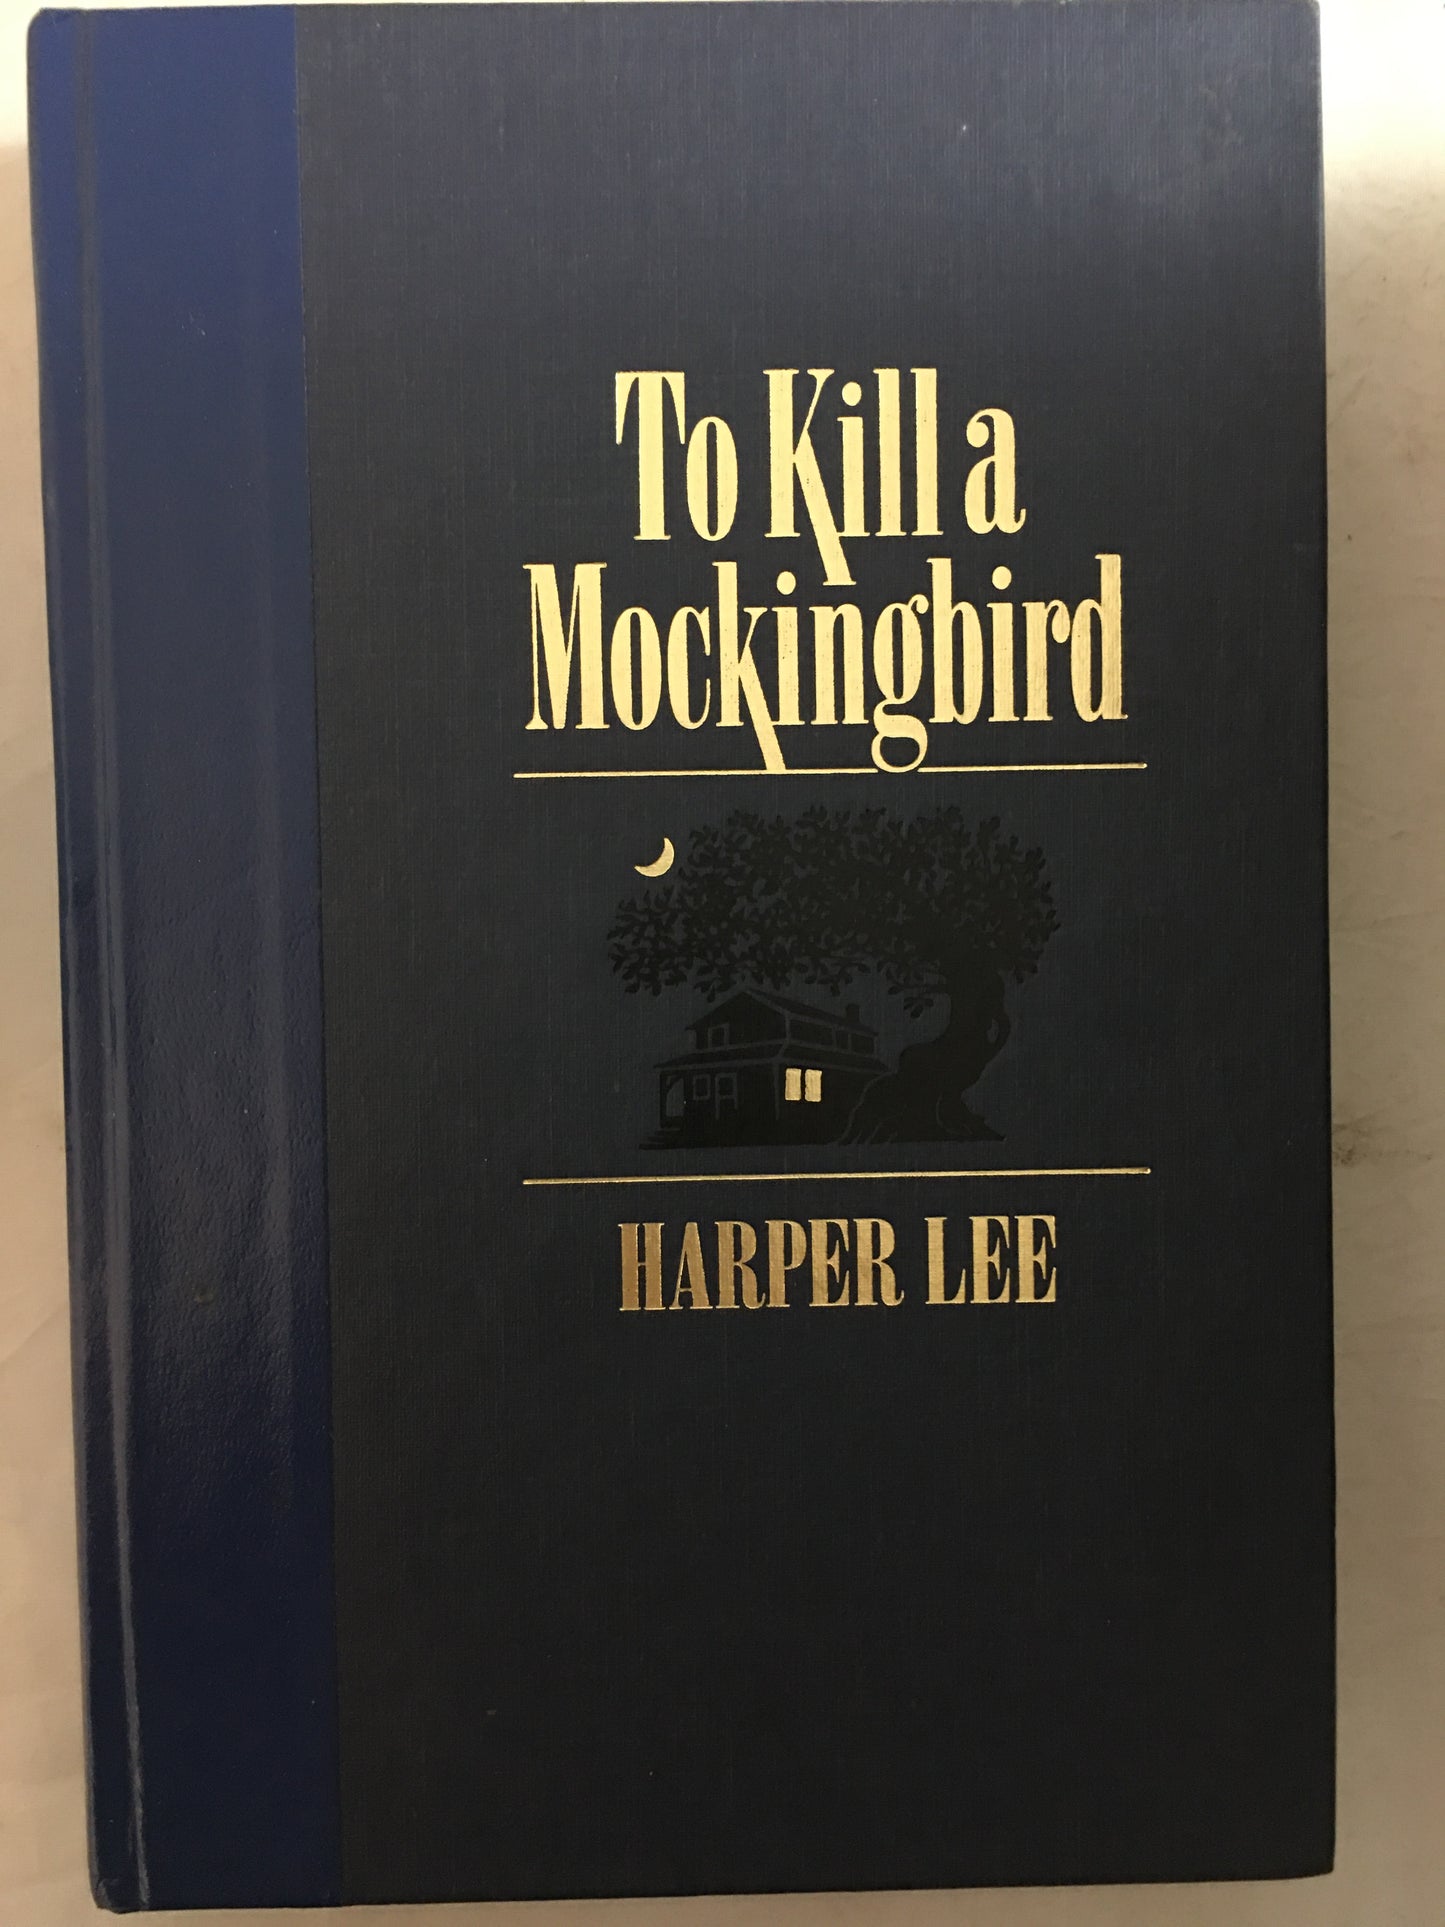 To Kill a Mockingbird Hardcover – January 1, 1993 by Harper Lee (Author), David Johnson (Illustrator), Timothy S. Healy (Afterword)